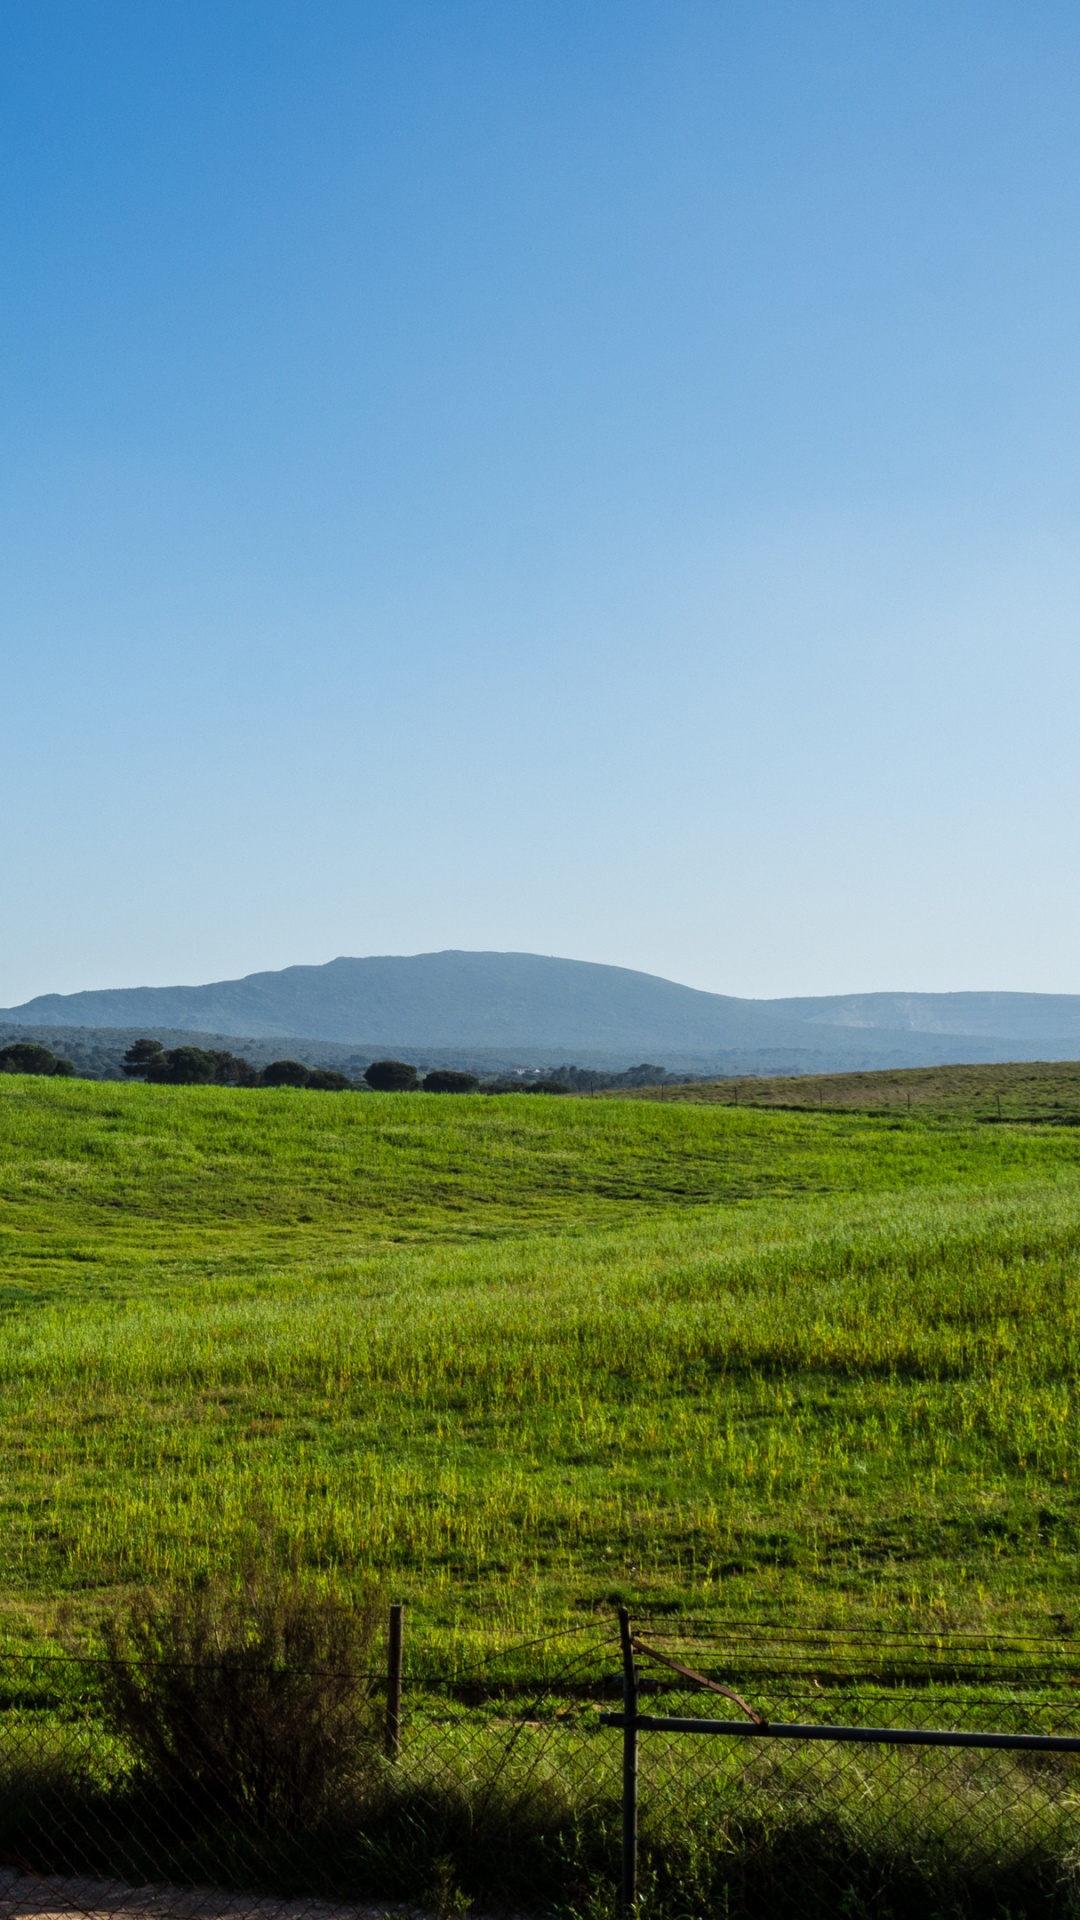 Green Grass Field Under Blue Sky During Daytime. Wallpaper in 1080x1920 Resolution